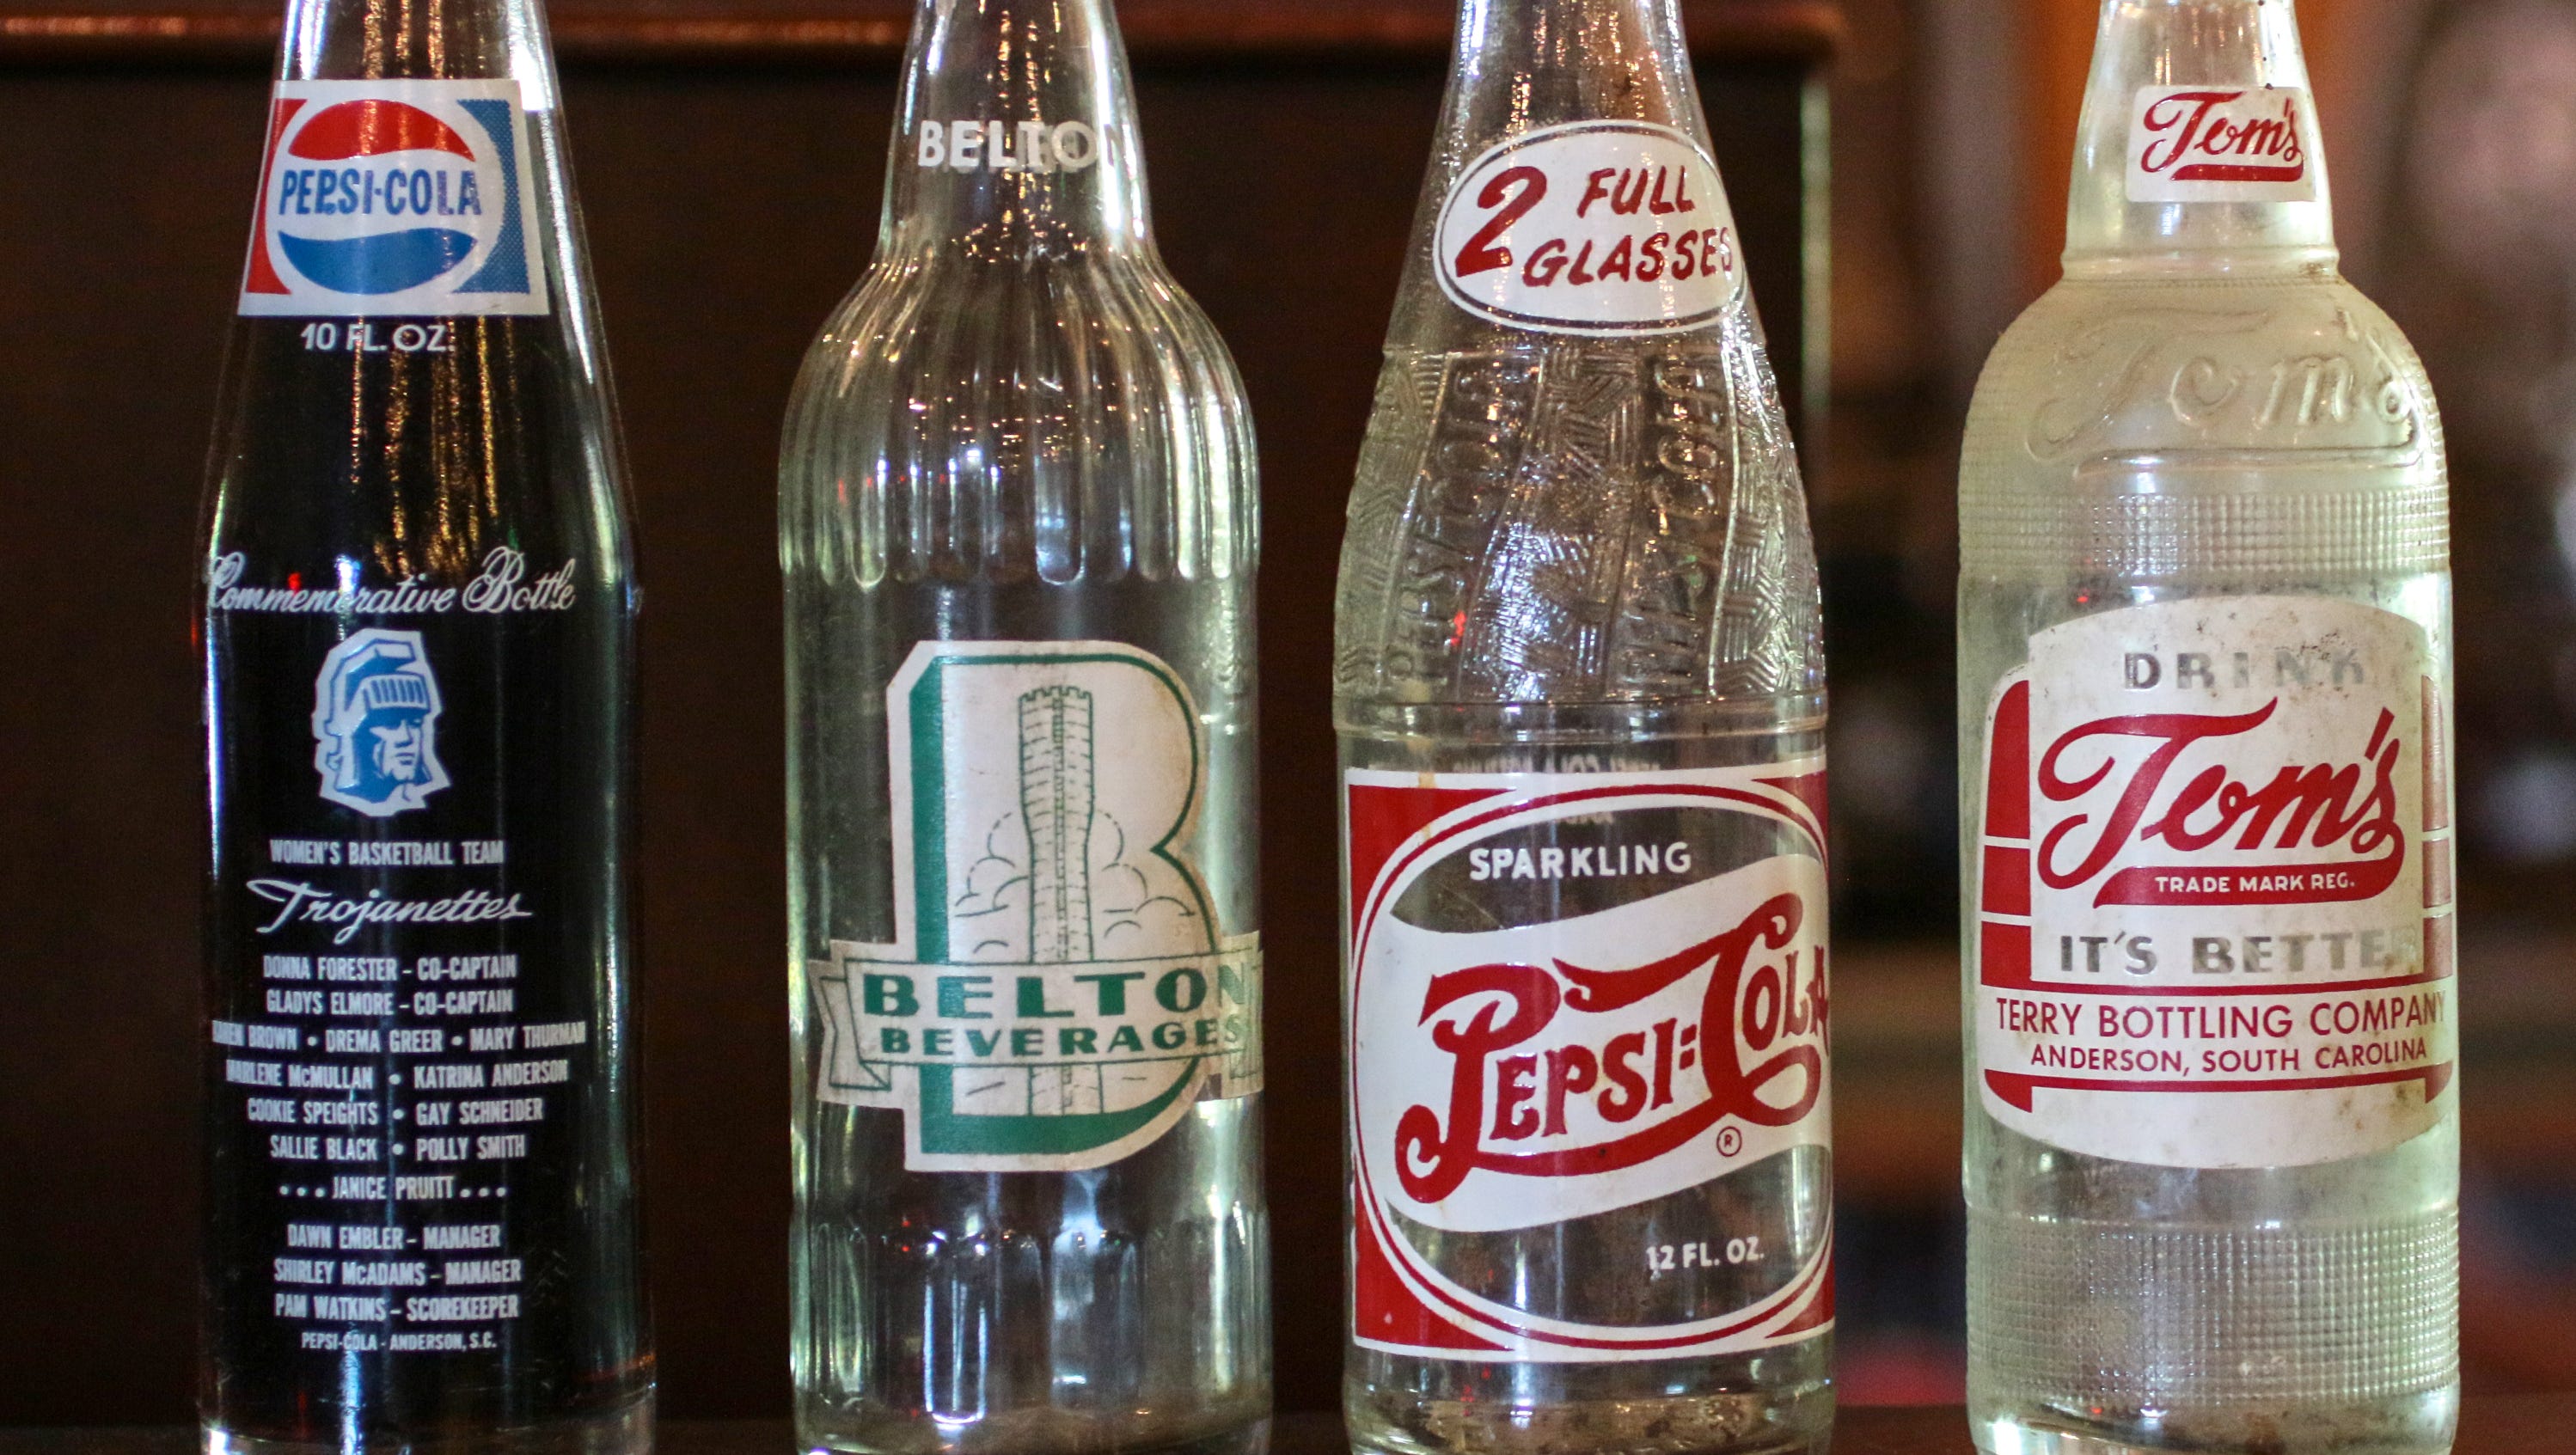 Pepsi cola bottles collectors guide